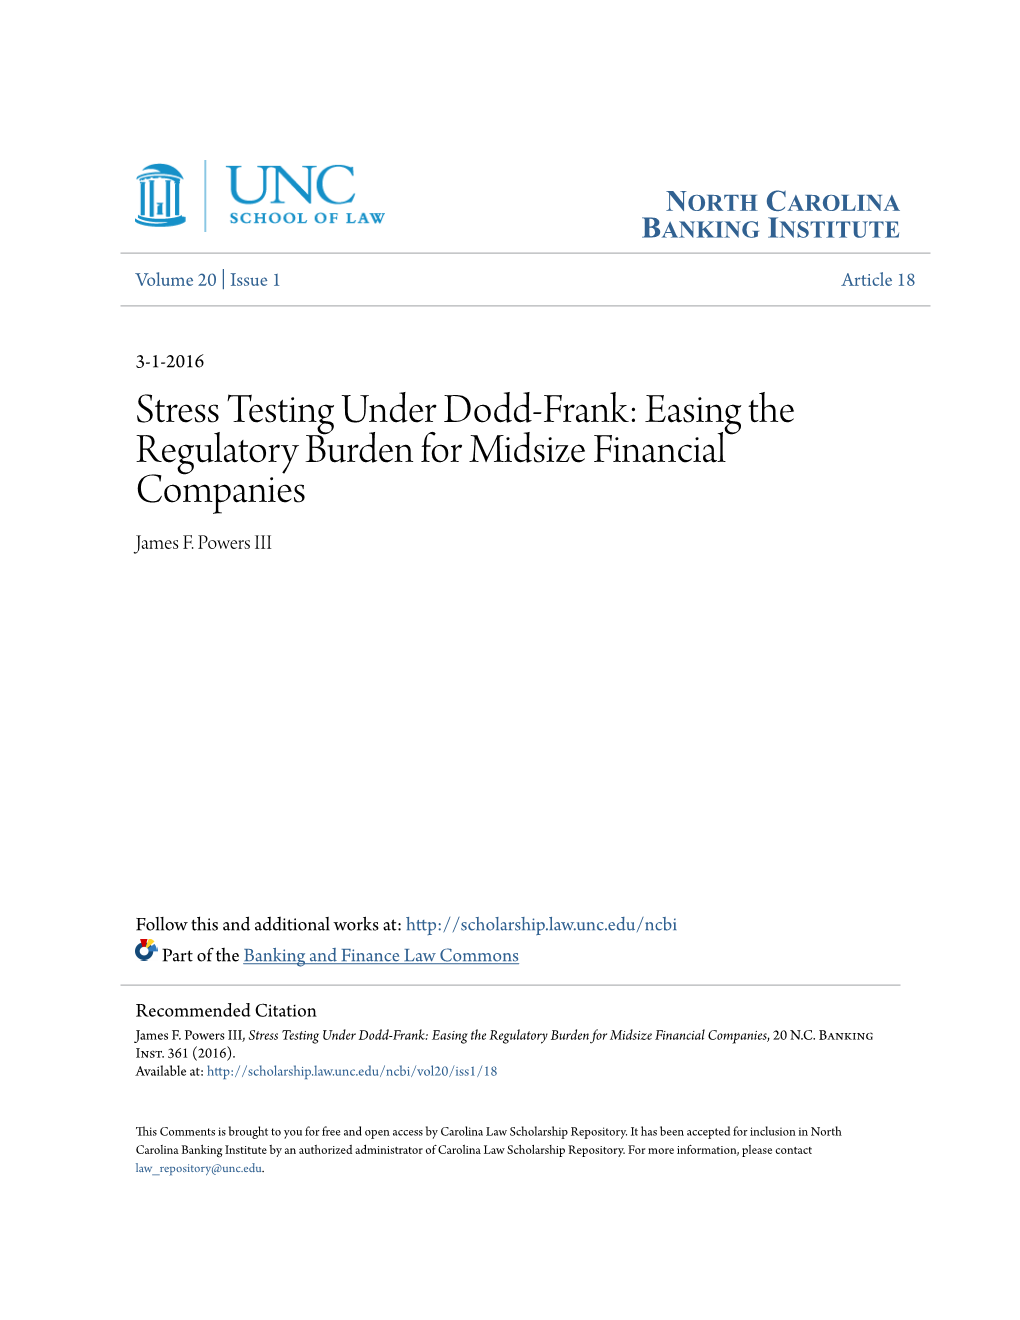 Stress Testing Under Dodd-Frank: Easing the Regulatory Burden for Midsize Financial Companies James F